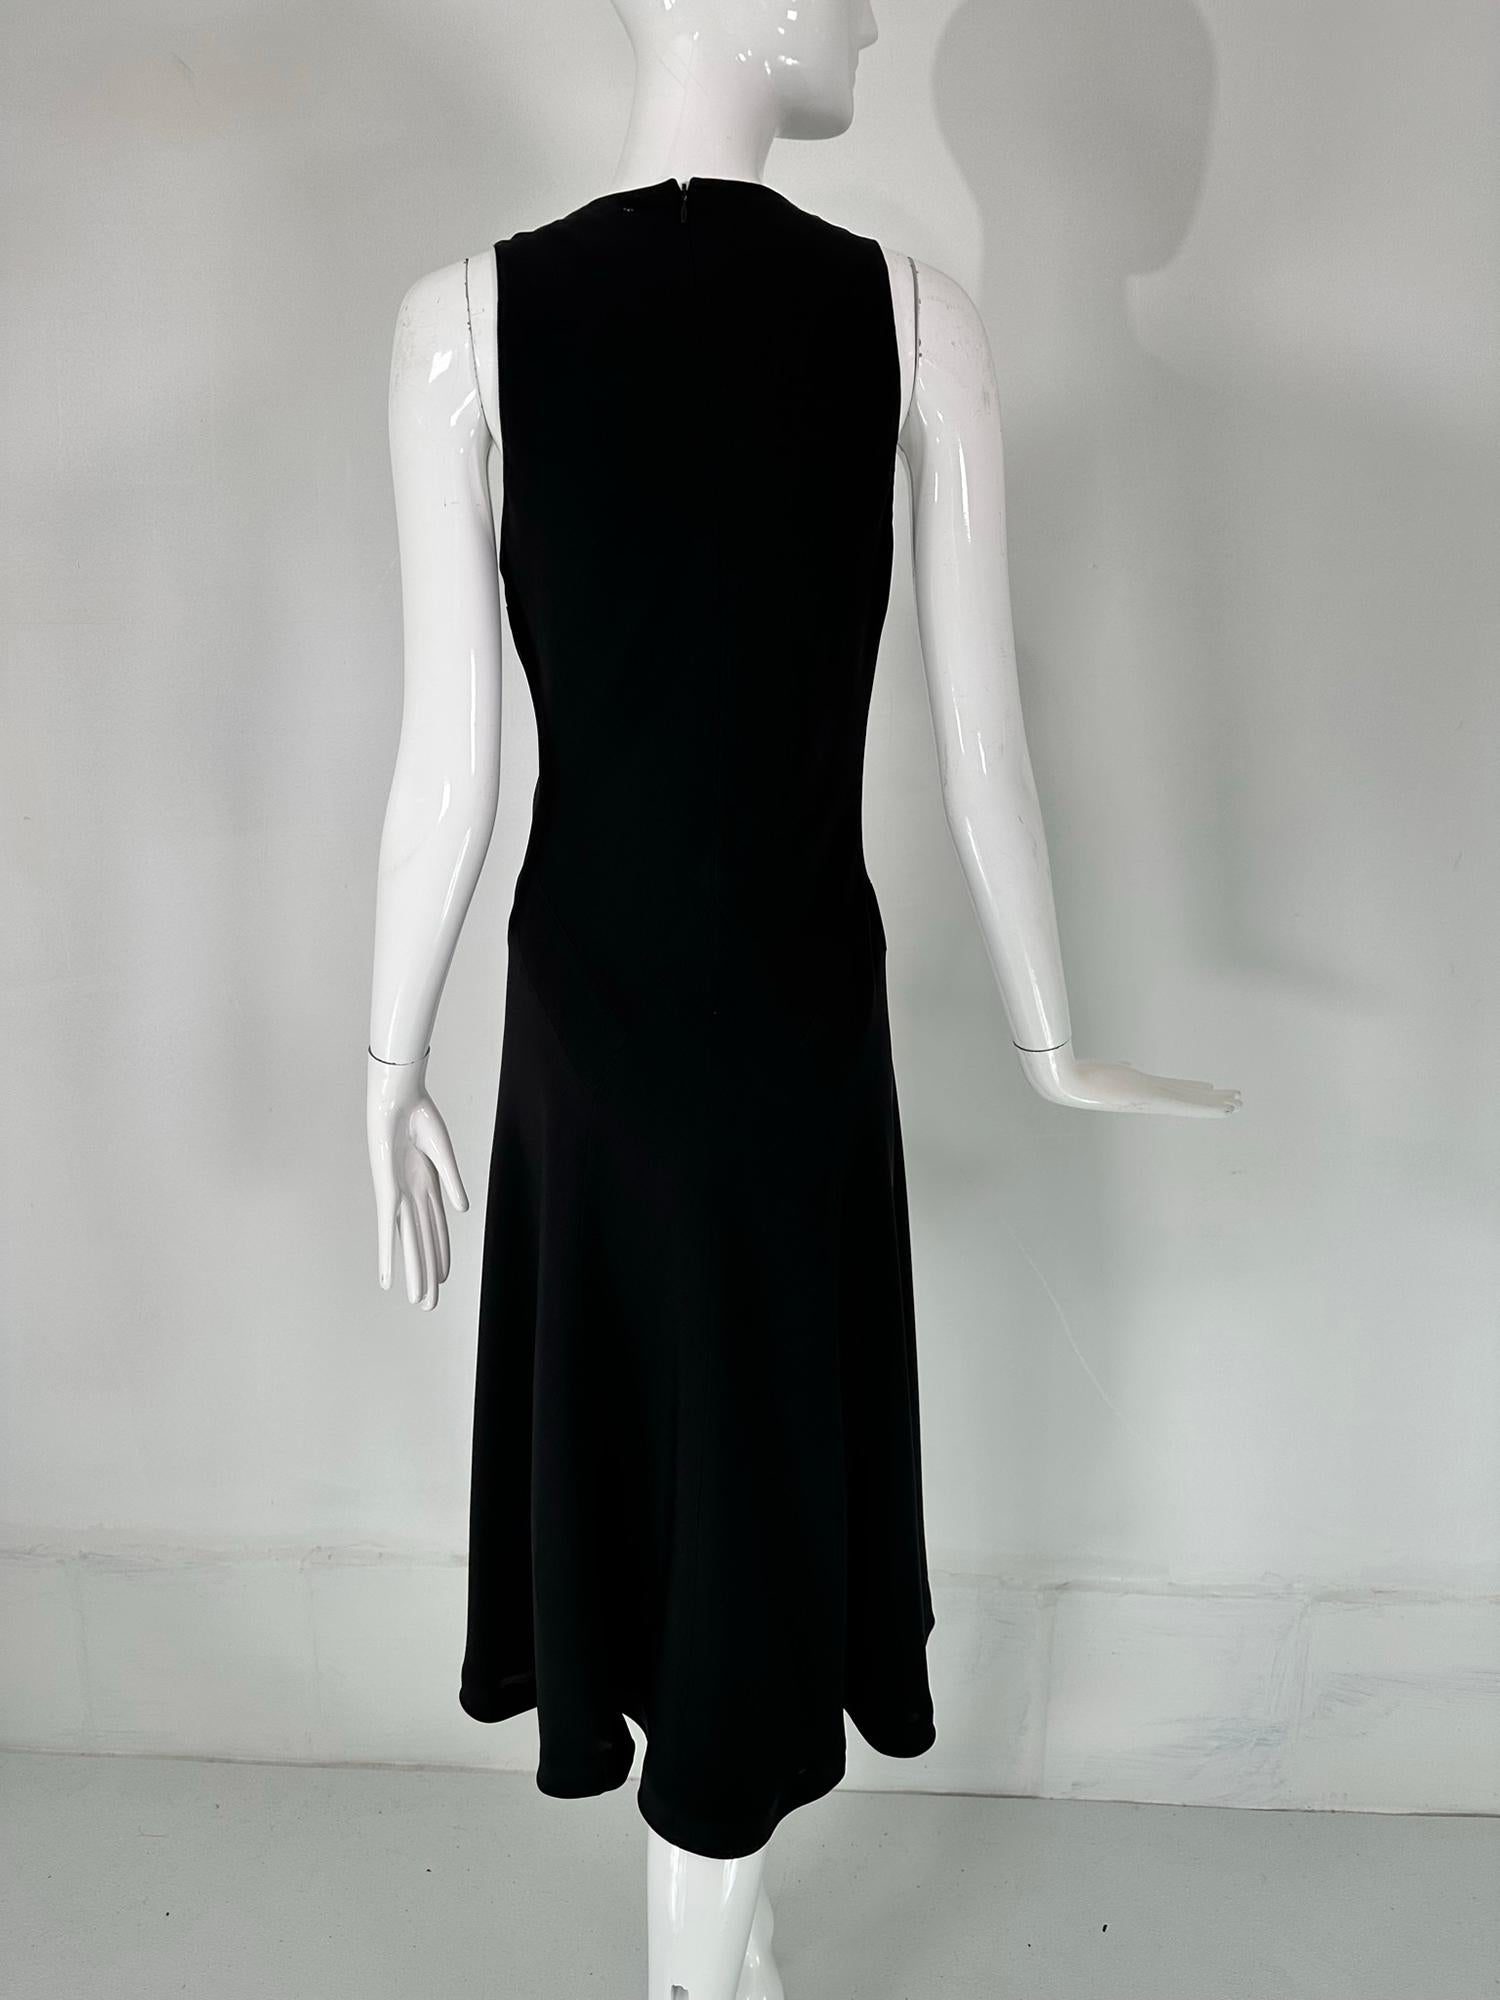 Ralph Lauren Black Label Classic Silk Bias Cut Dress 8 For Sale 3